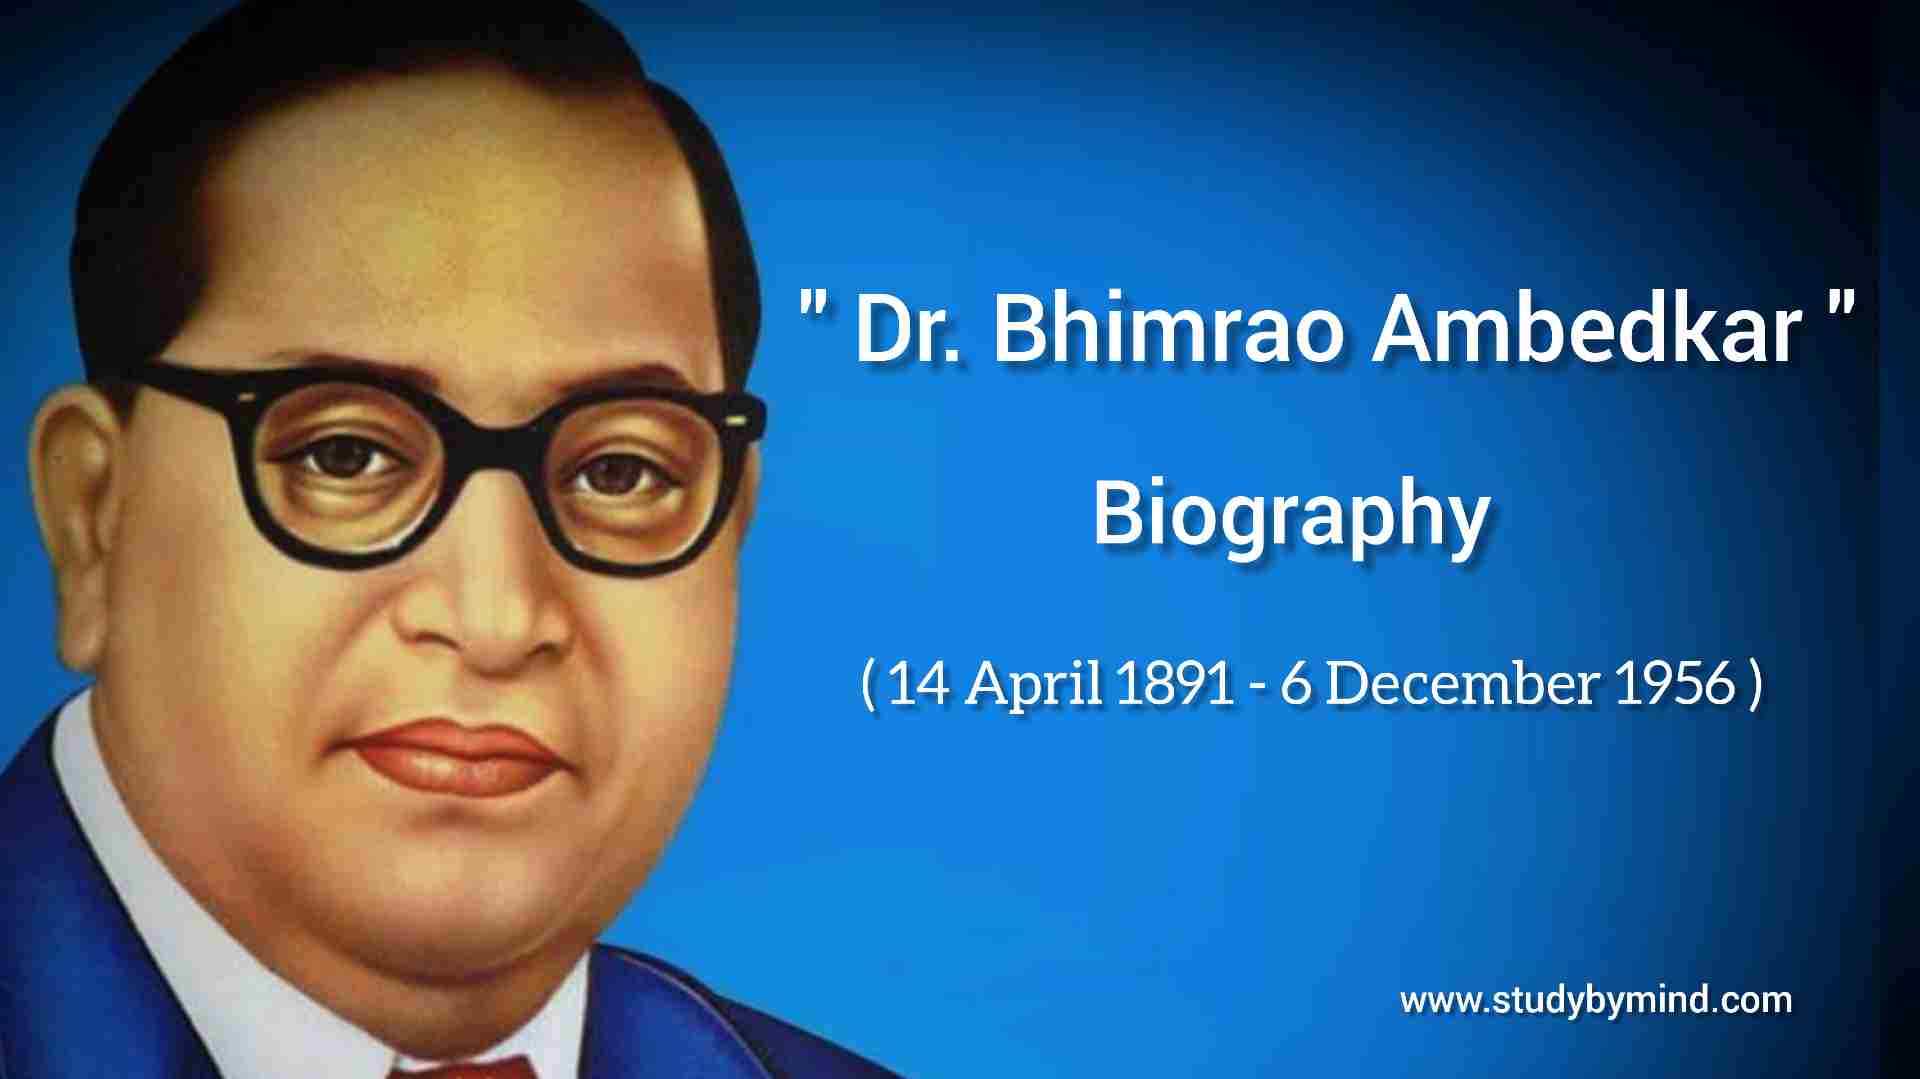 write a biography of dr bhimrao ambedkar